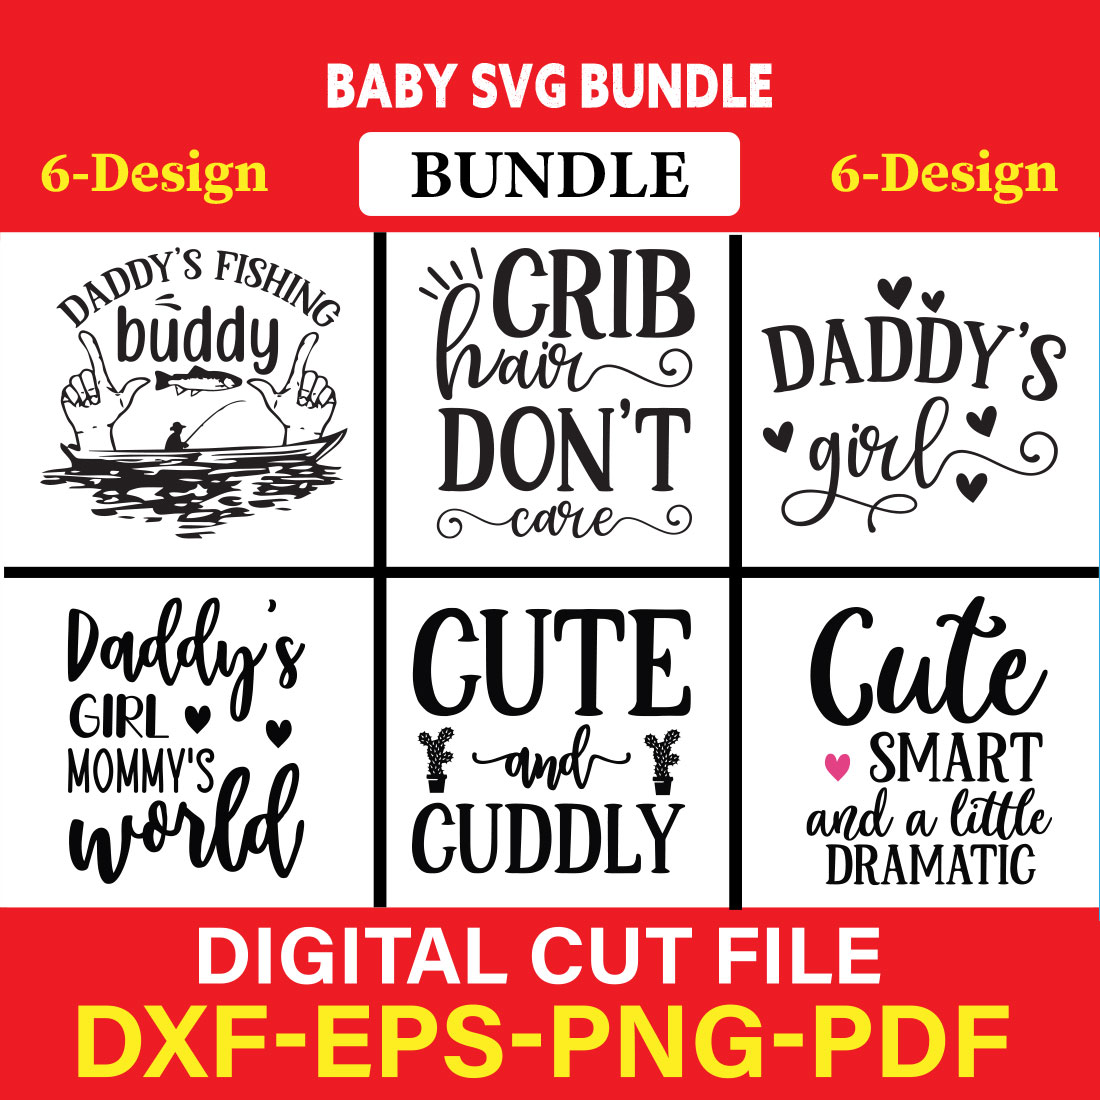 Baby T-shirt Design Bundle Vol-2 cover image.